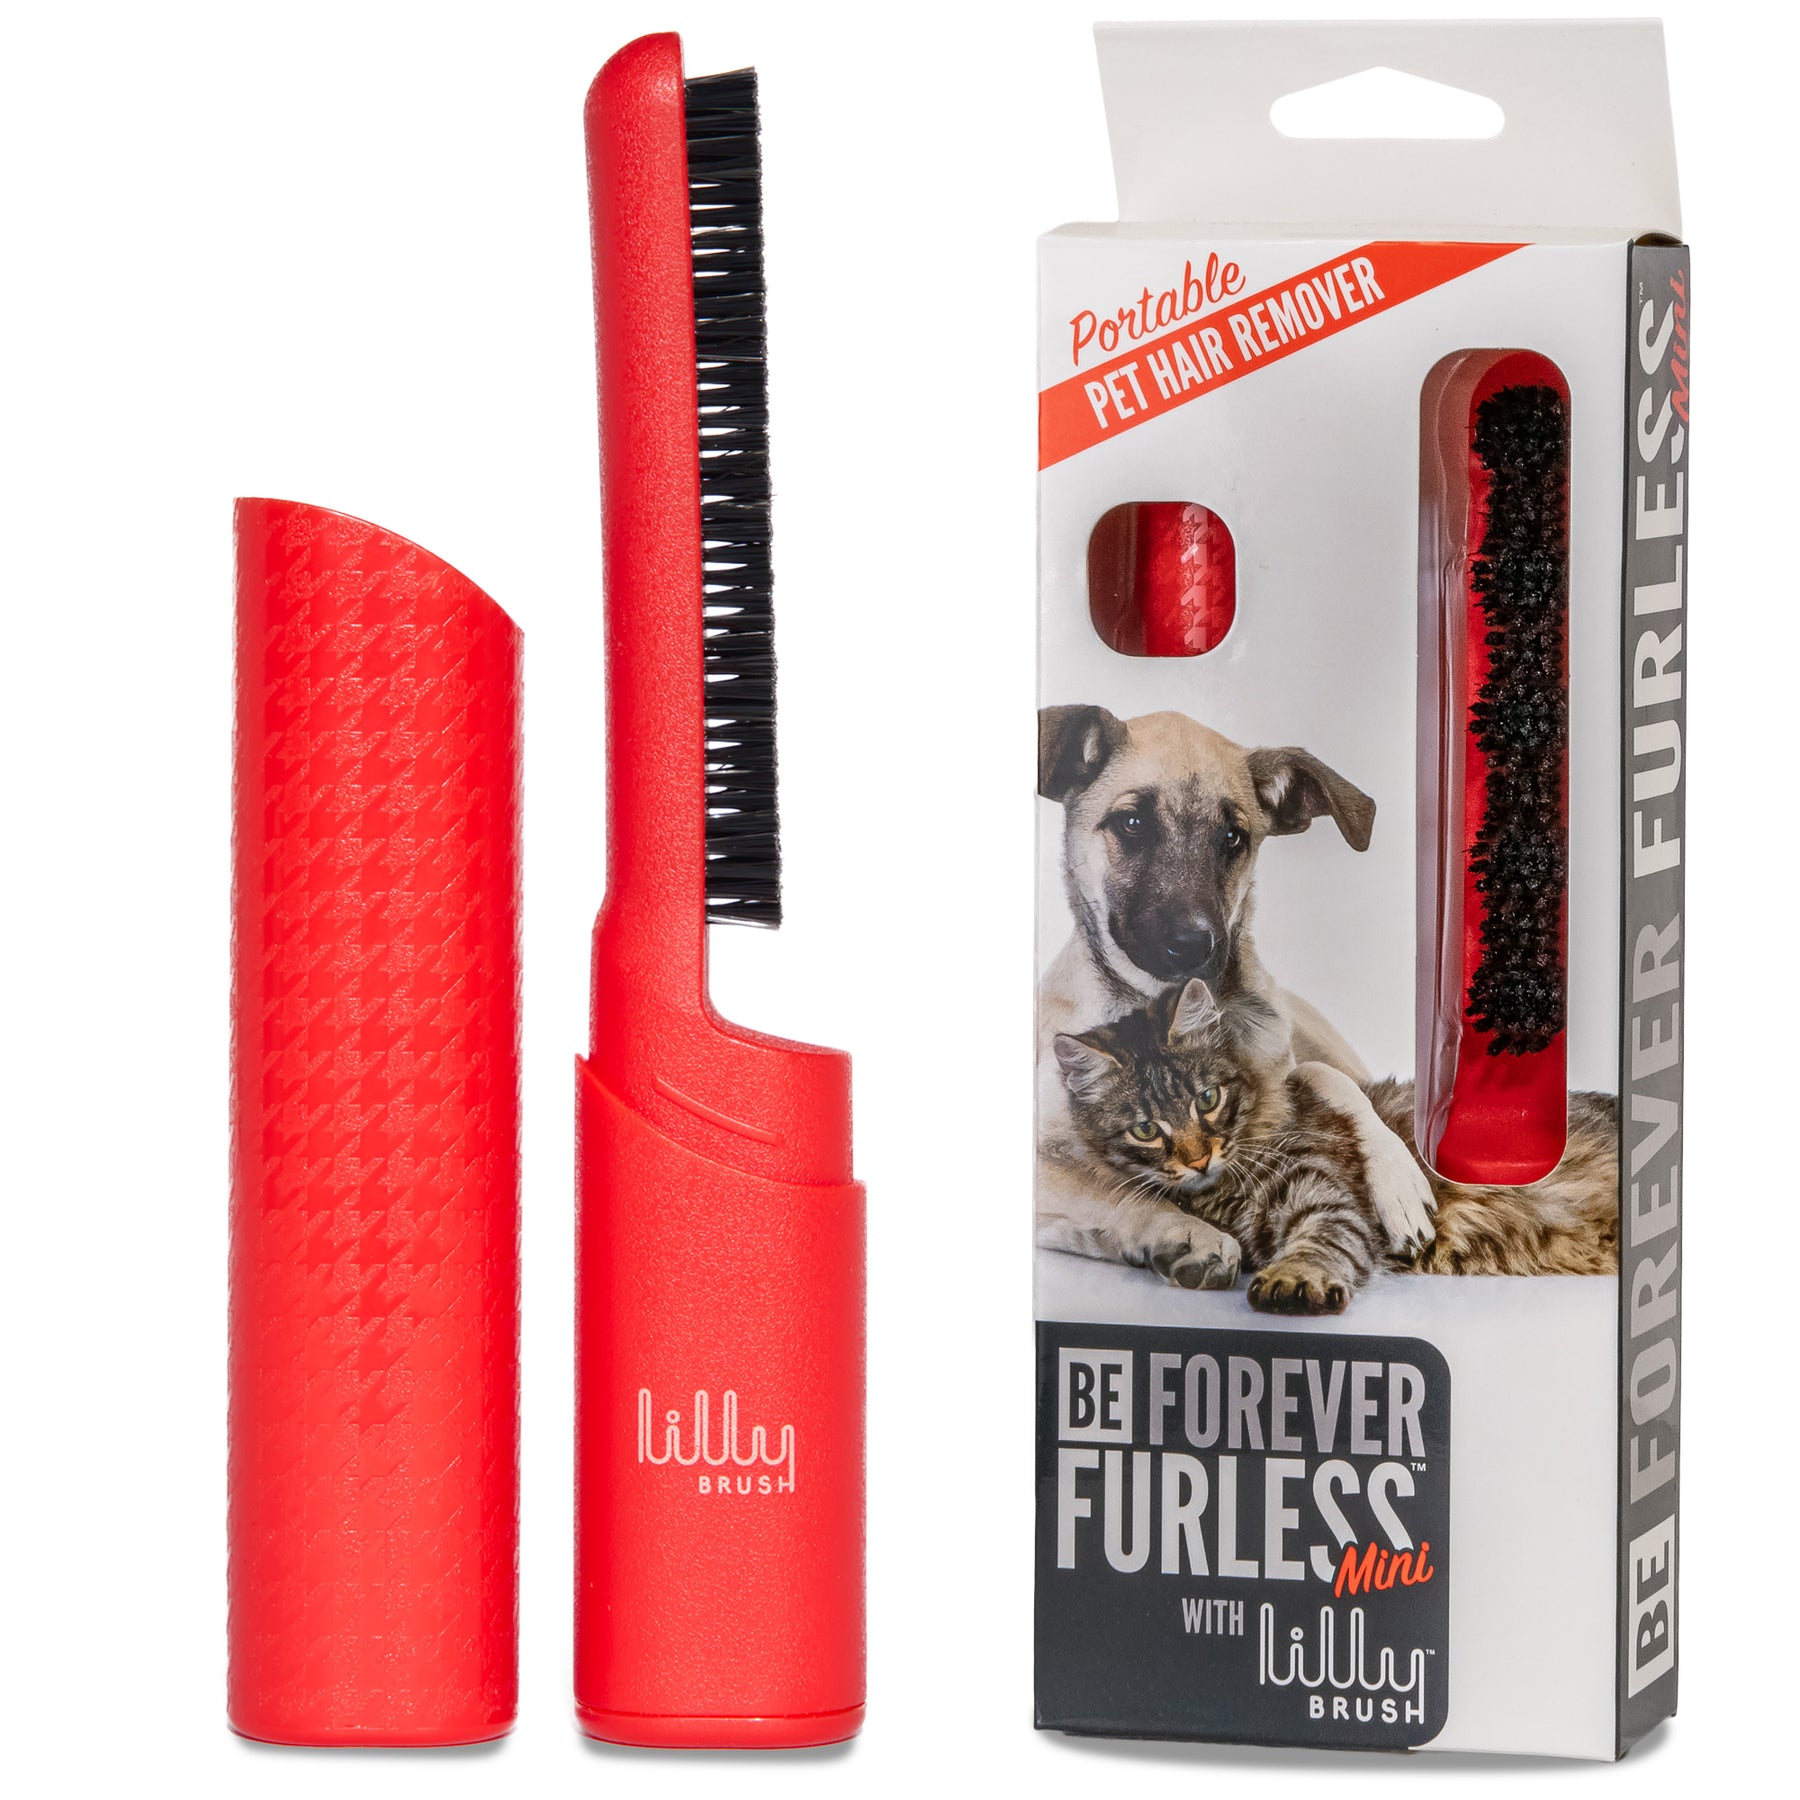 Lilly Brush Pro Pet Hair Tool Kit